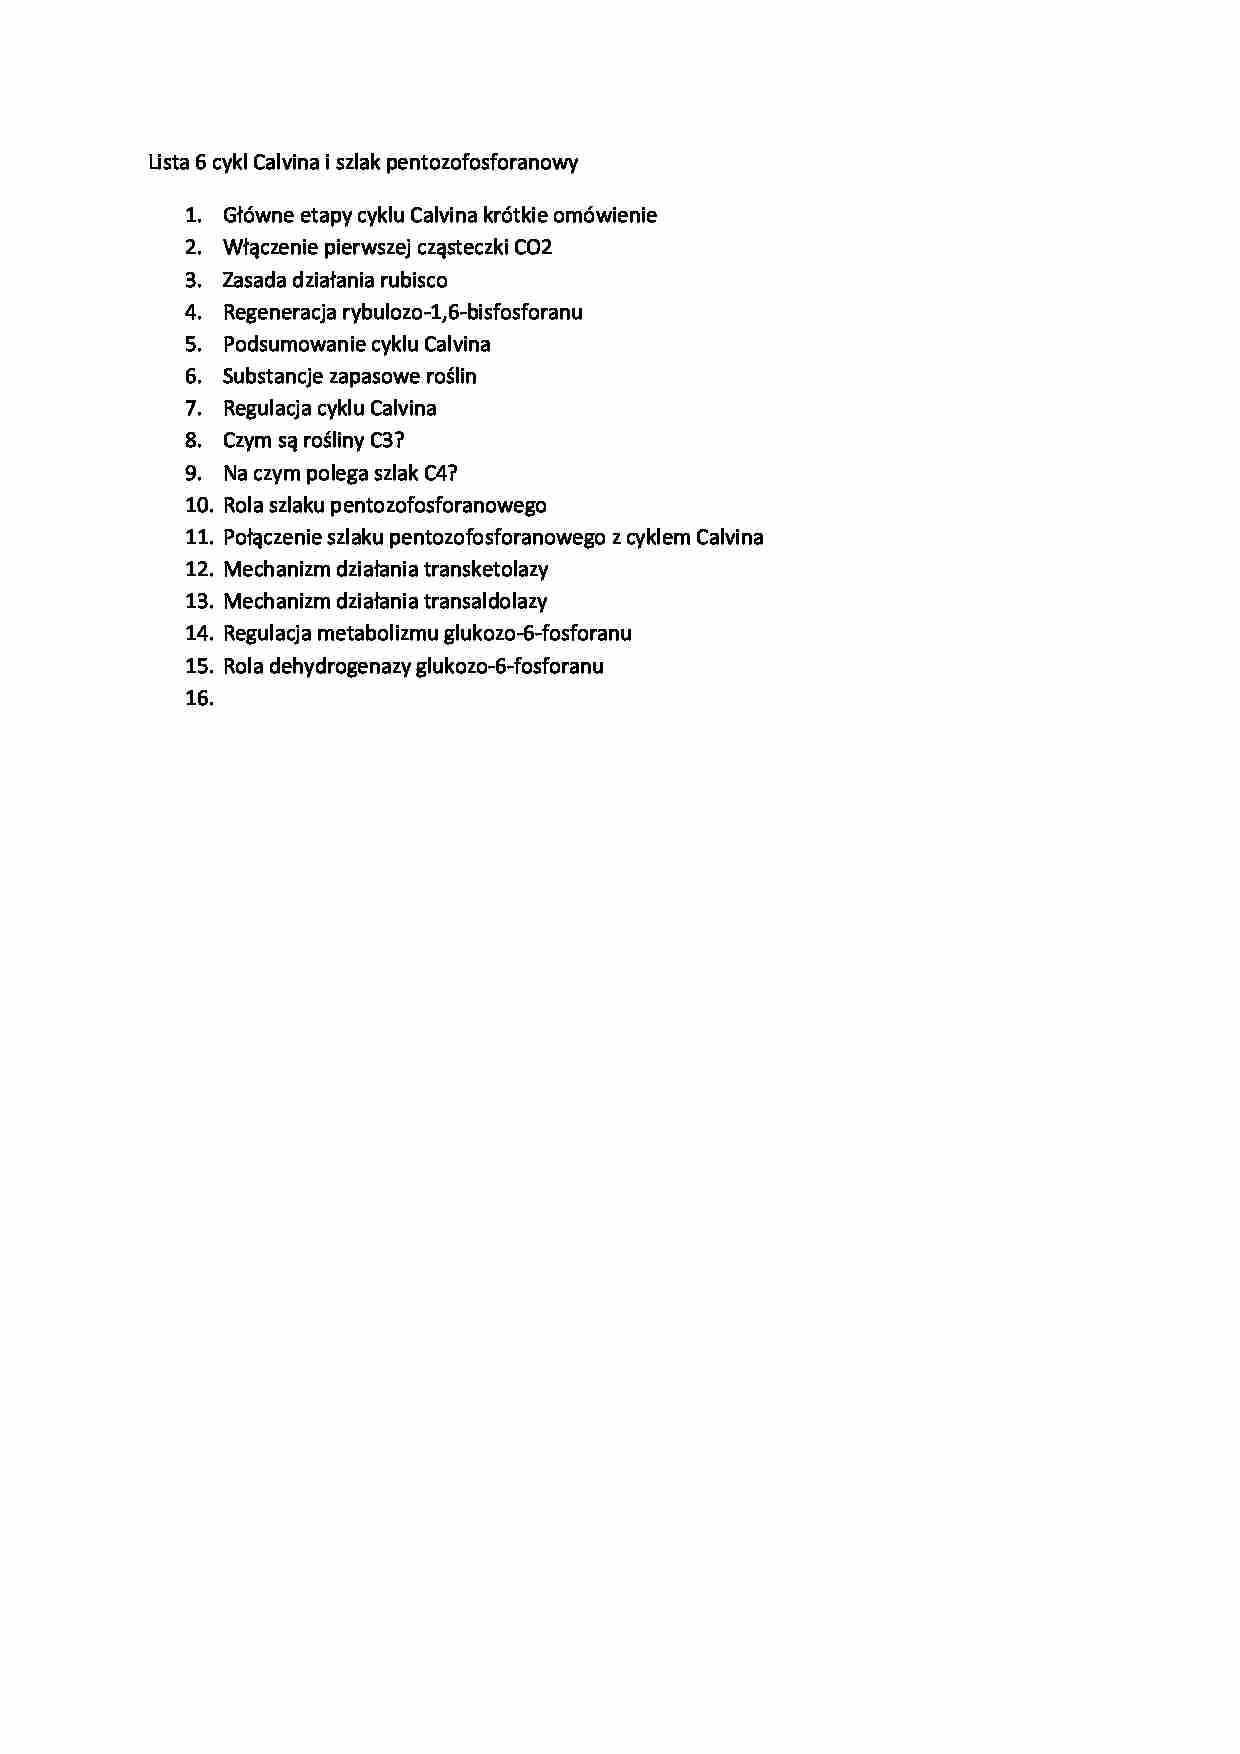 Zagadnienia do cykl calvina i szlak pentozofosforanowy - strona 1